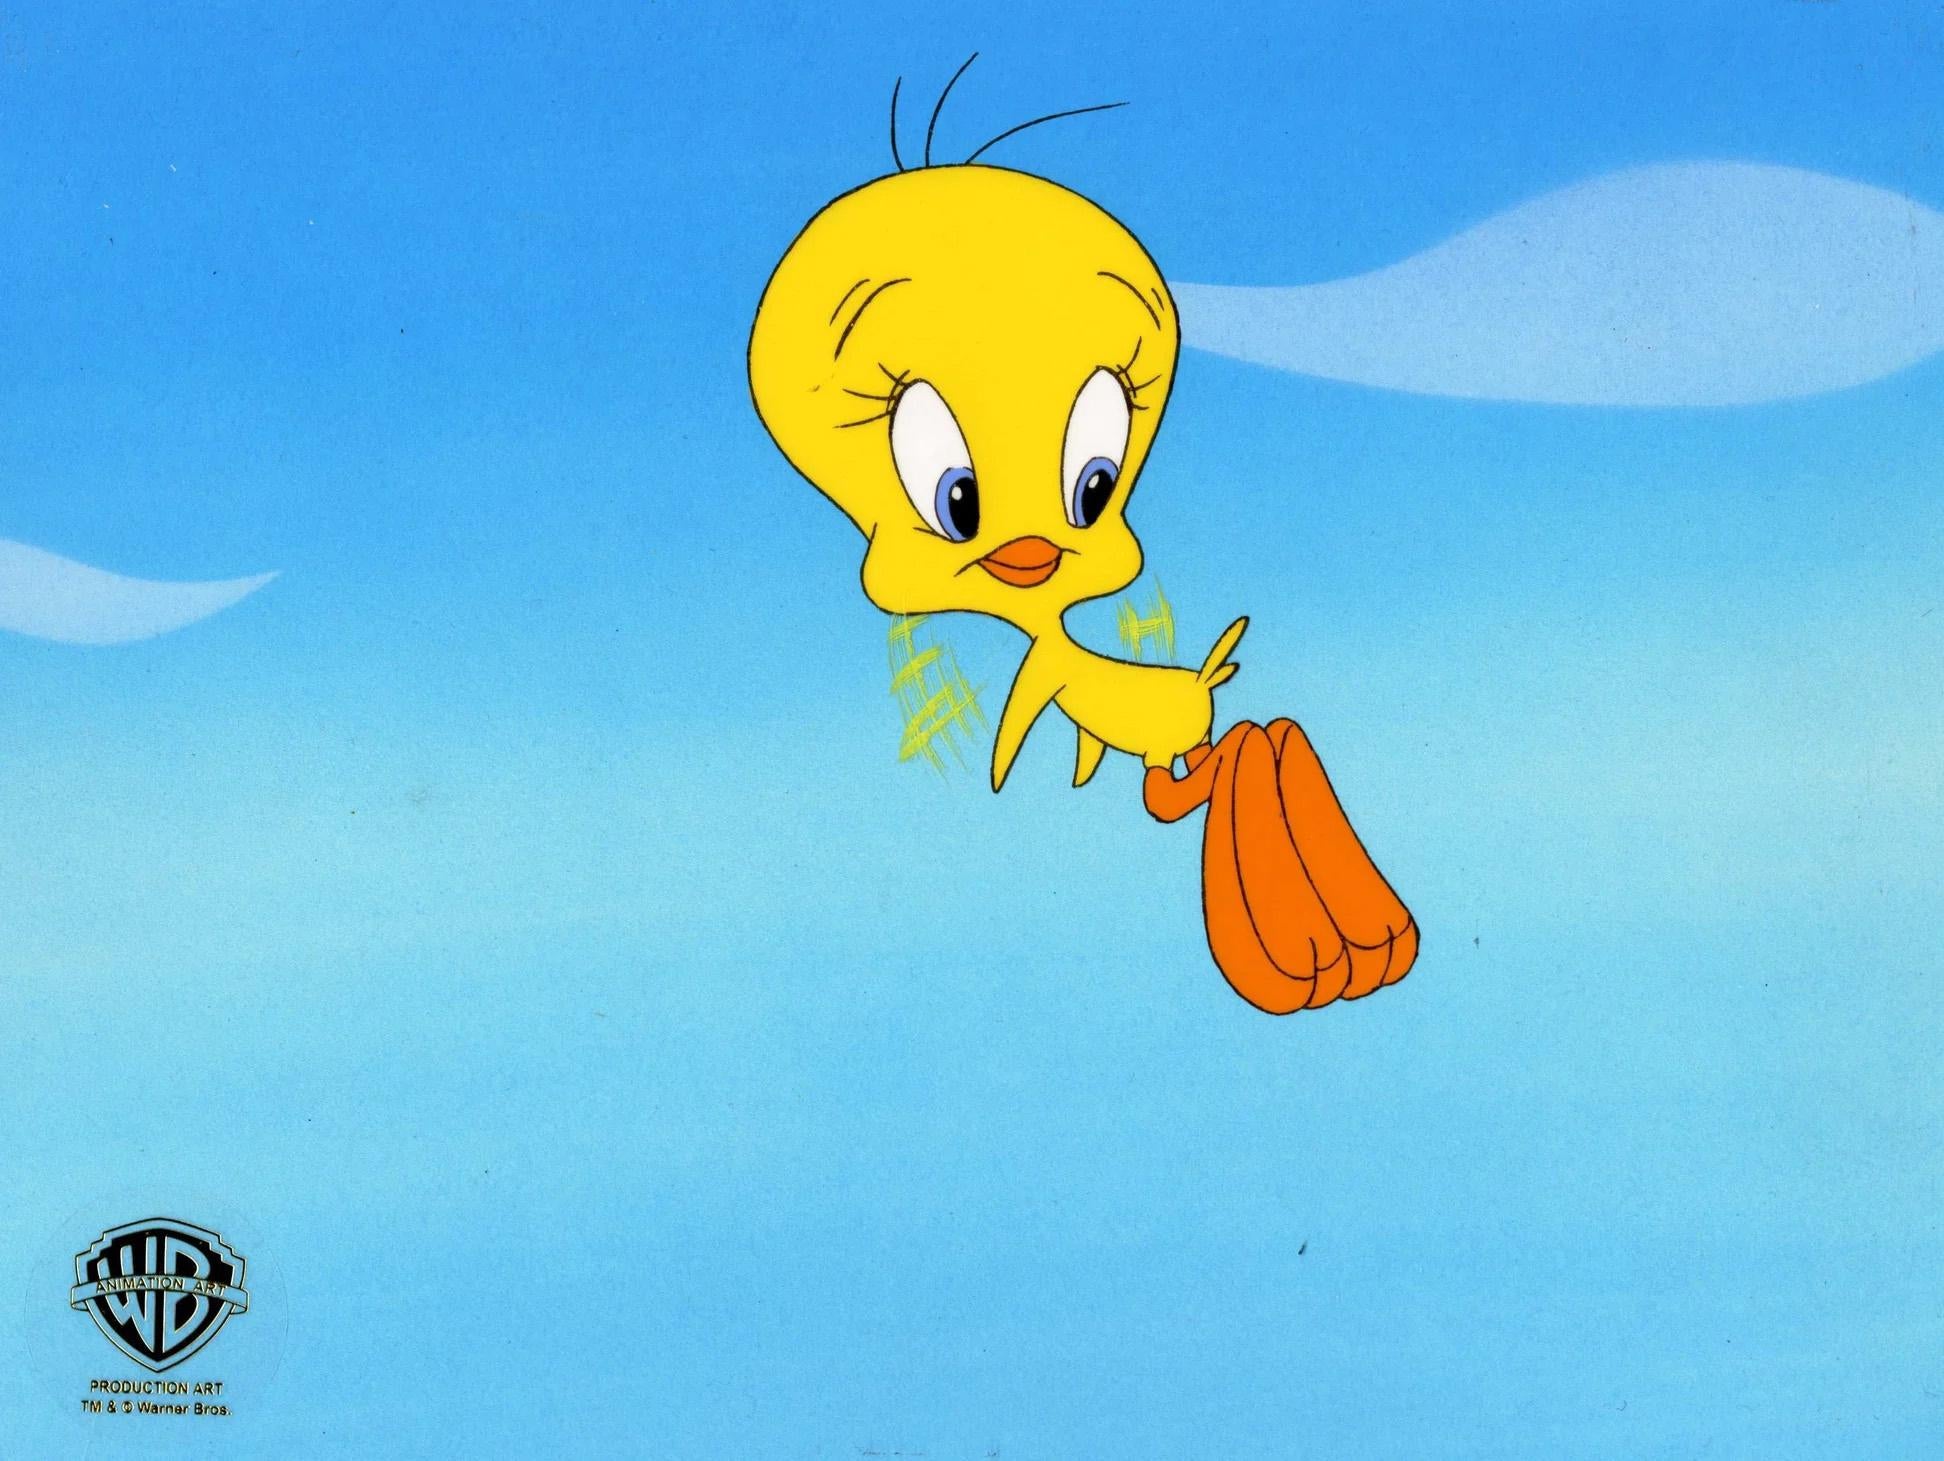 Looney Tunes Original Production Cel on Original Background: Tweety Bird - Art by Warner Bros. Studio Artists